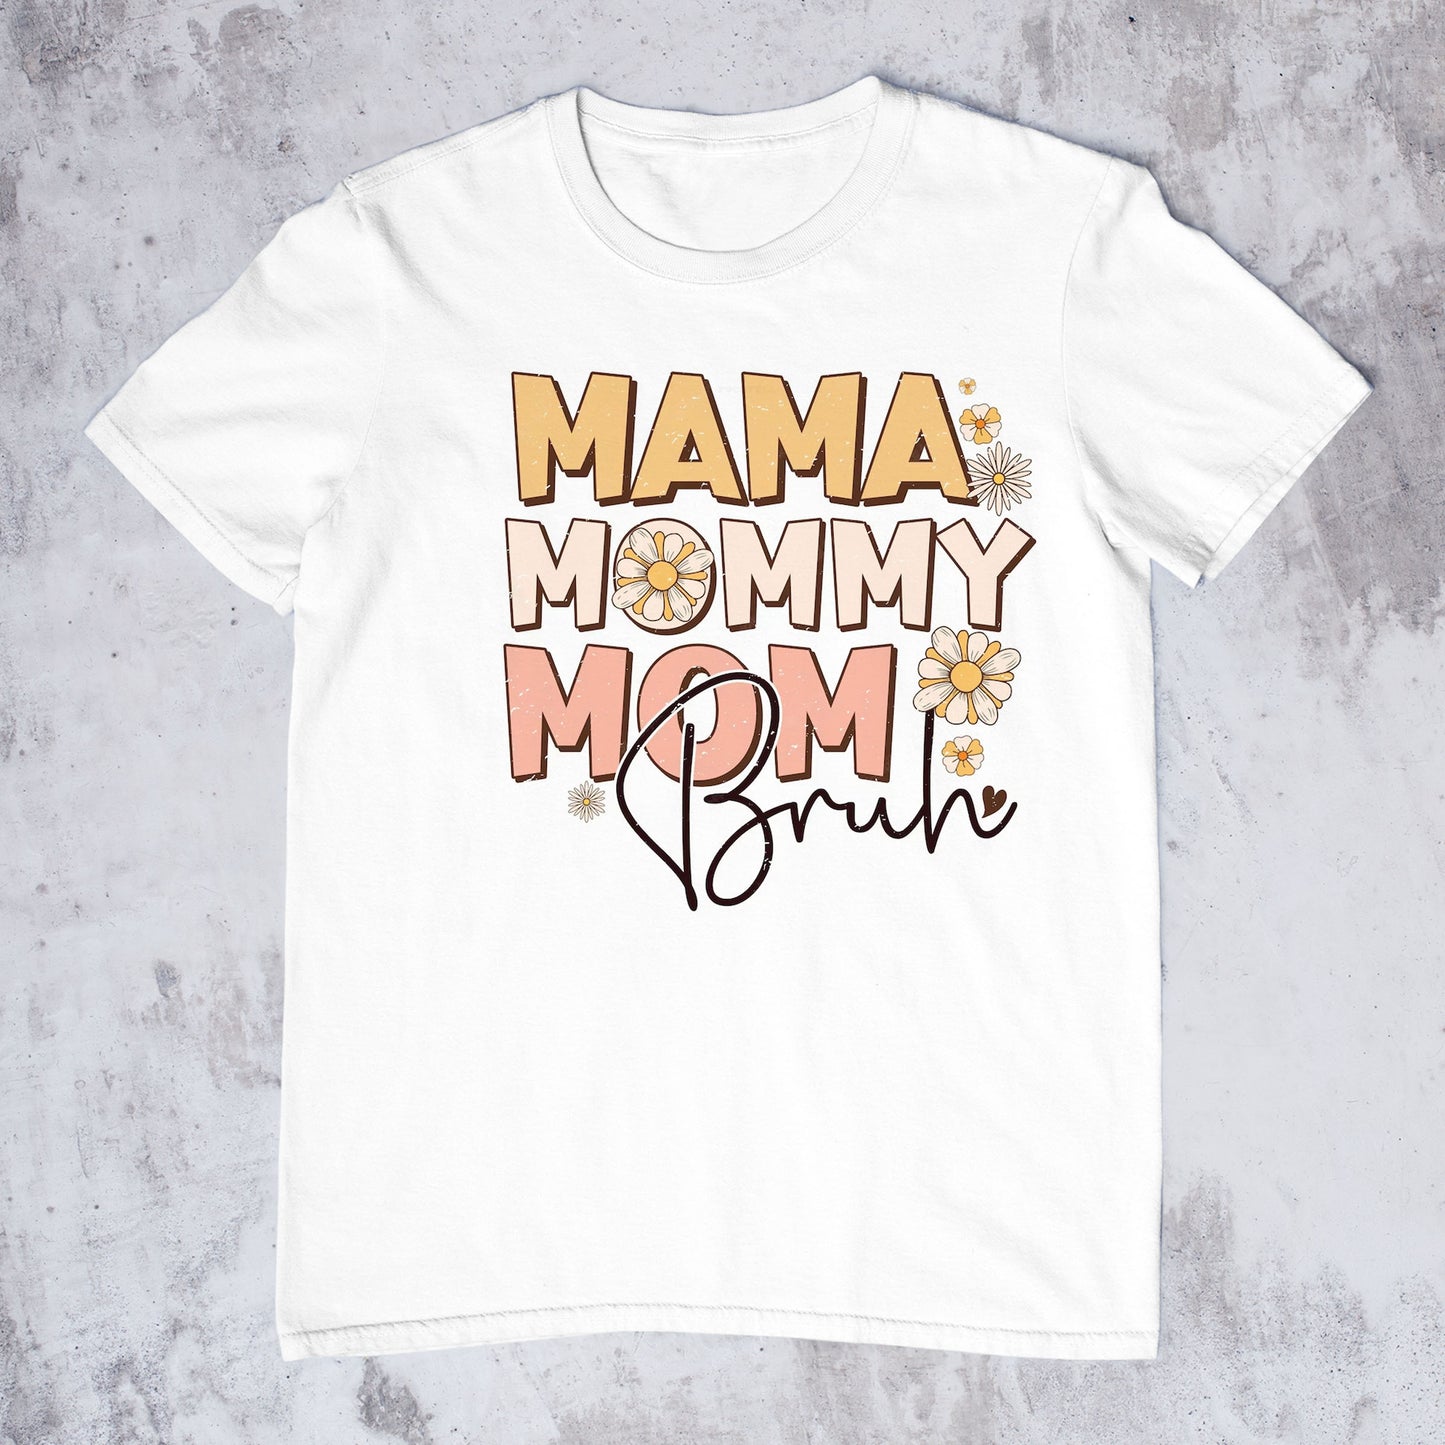 Mommy Mama Mom Bruh